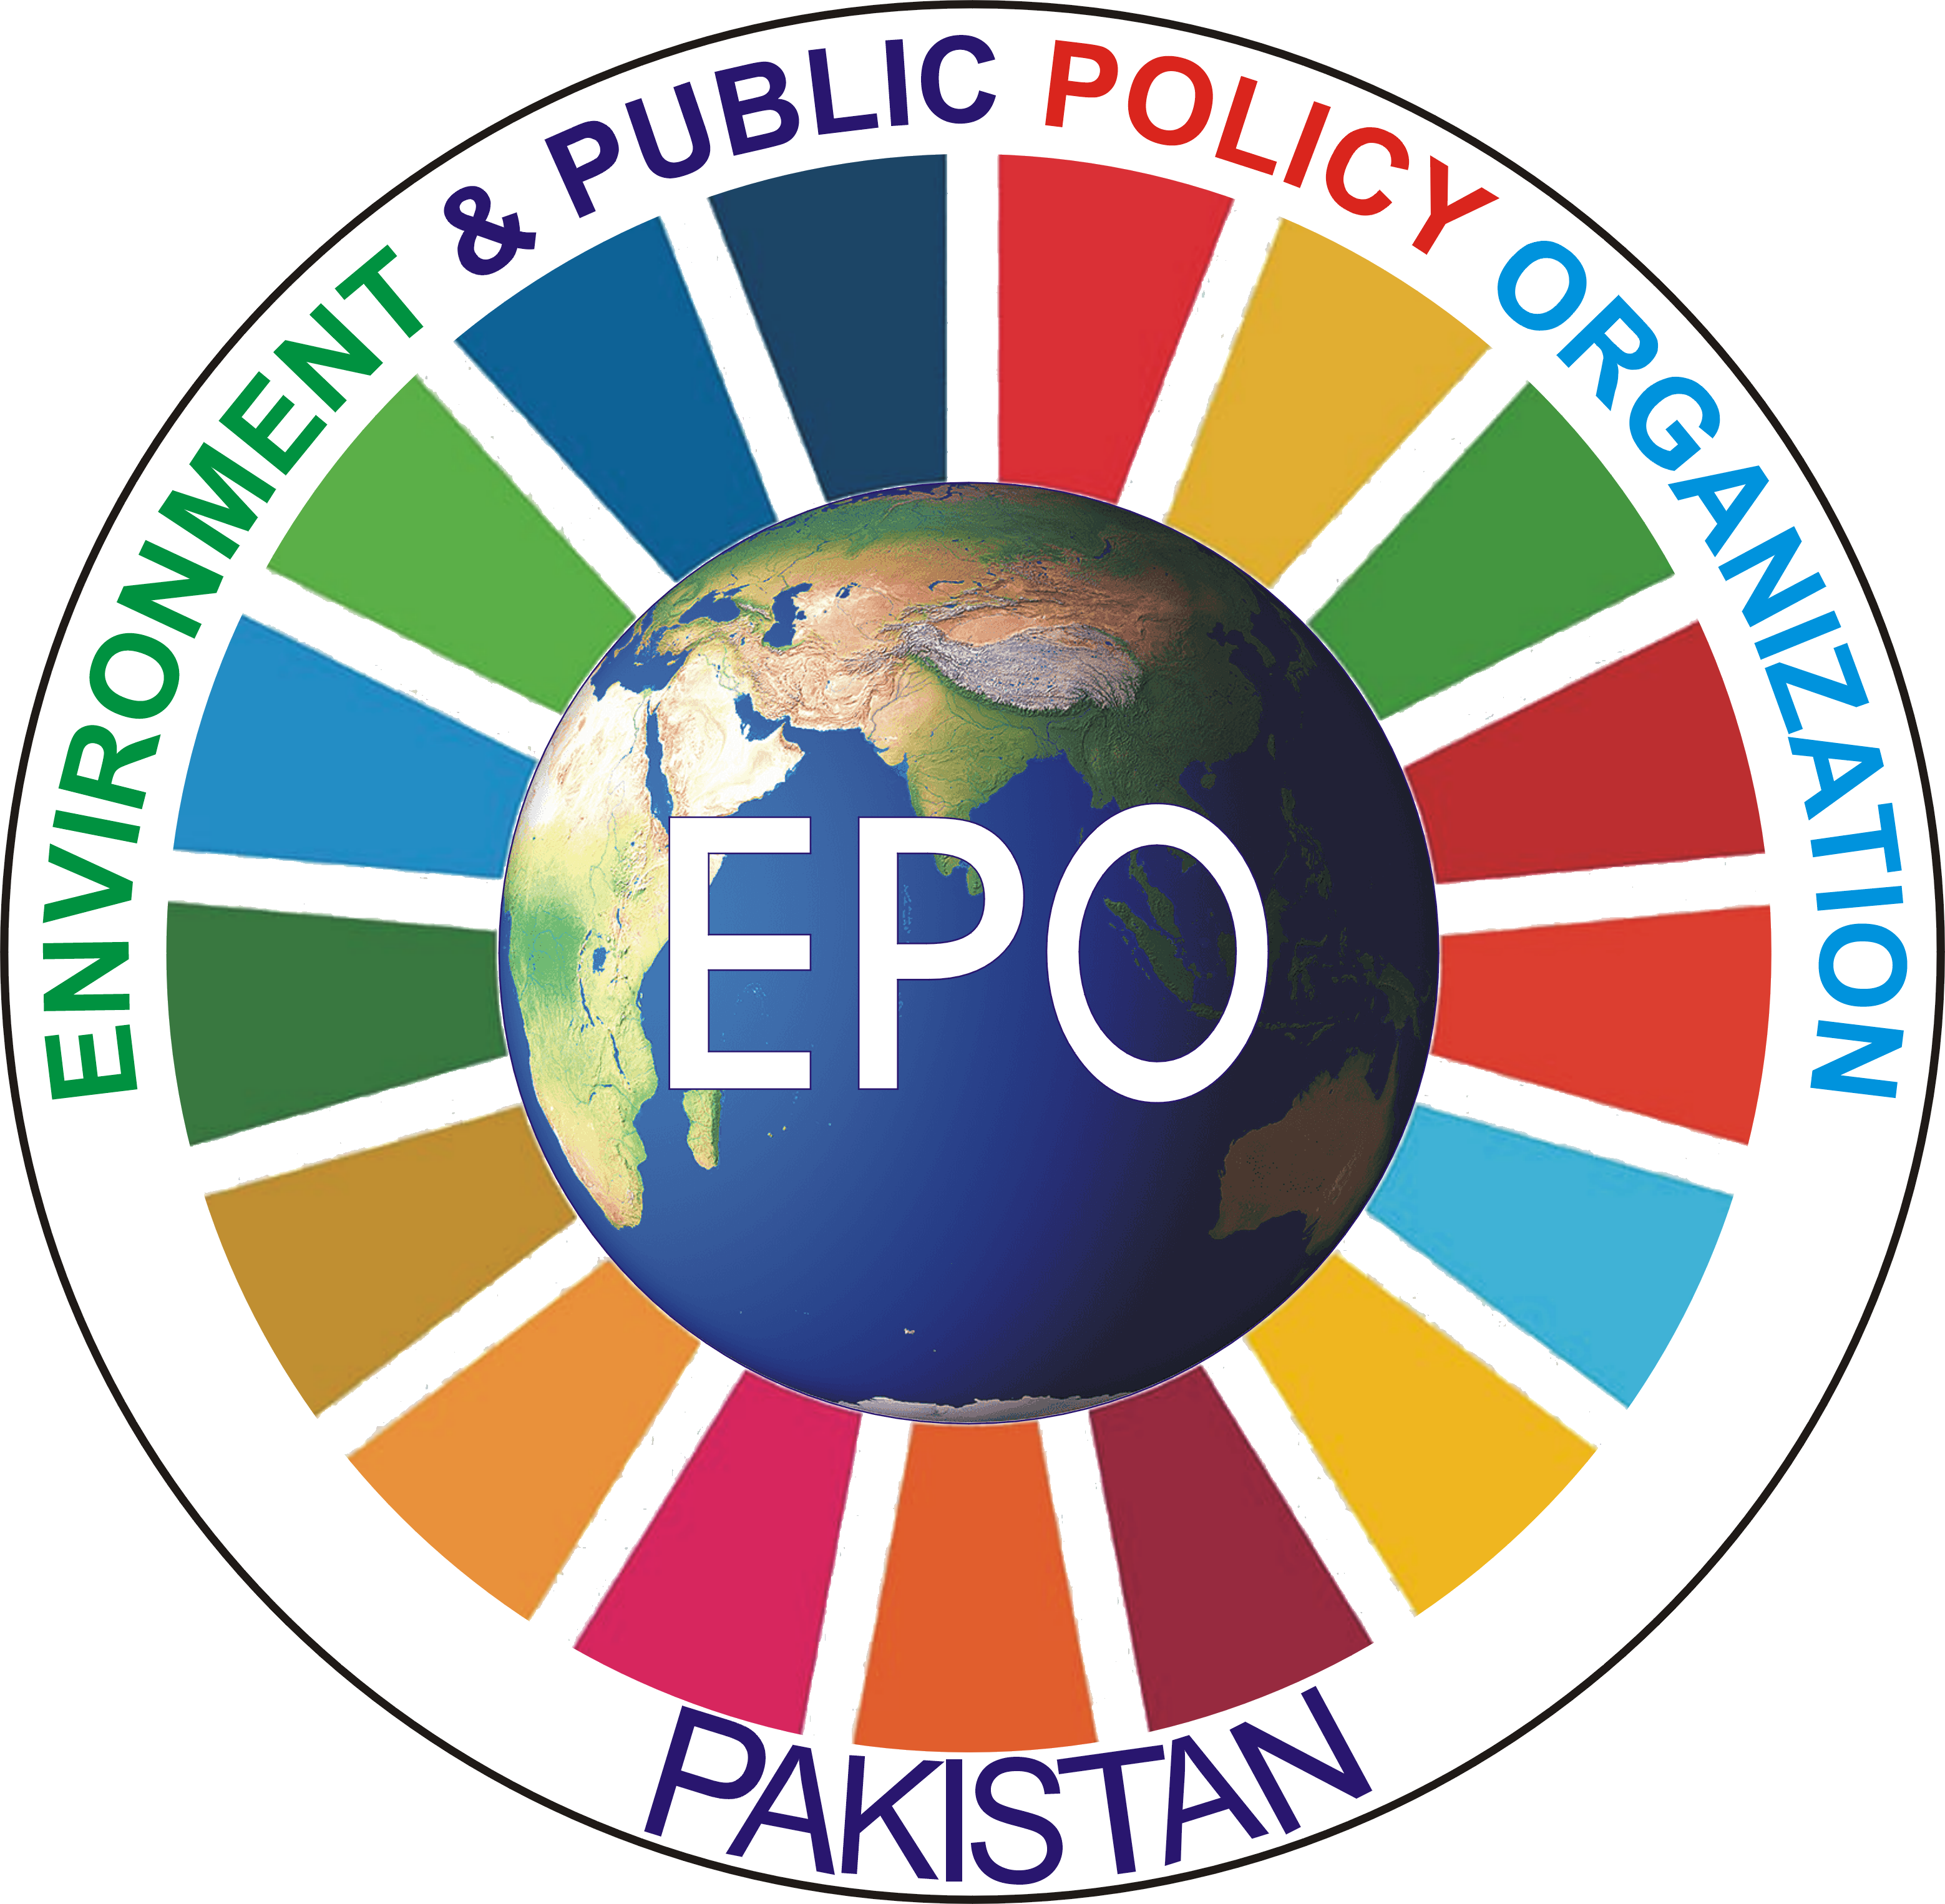 Environment & Public Policy Organization